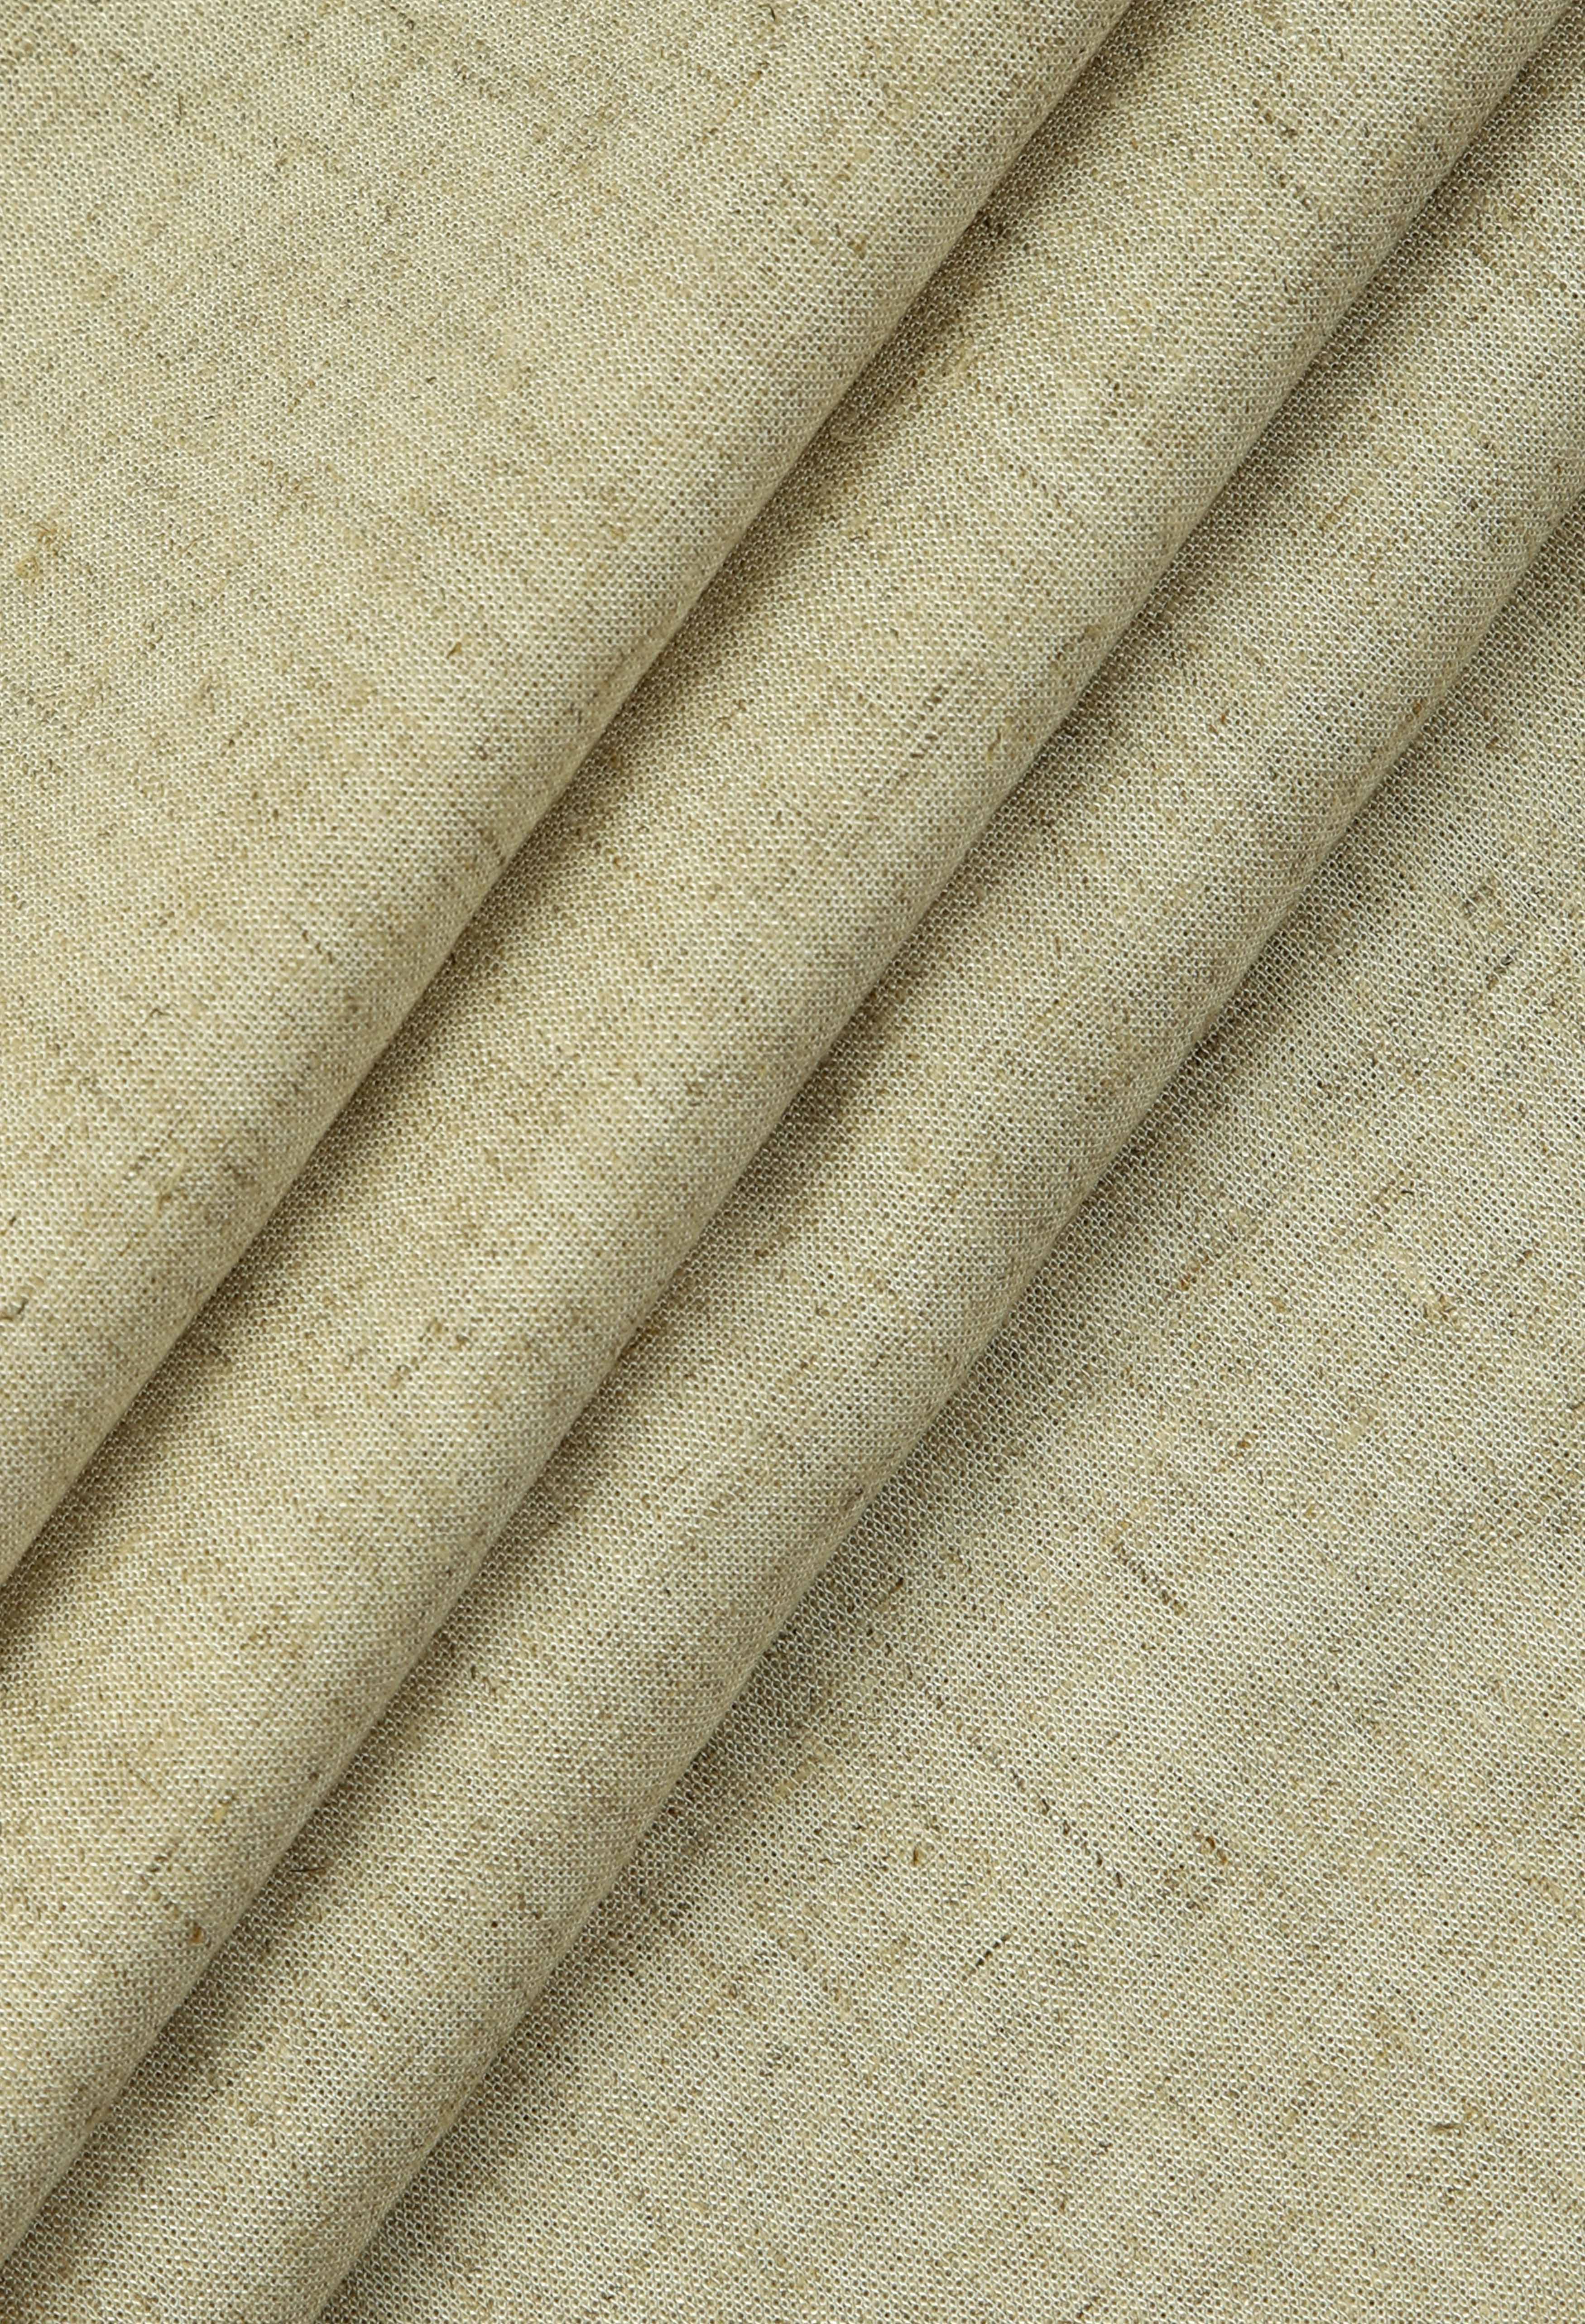 Sand Brown Linen (TH-000680)